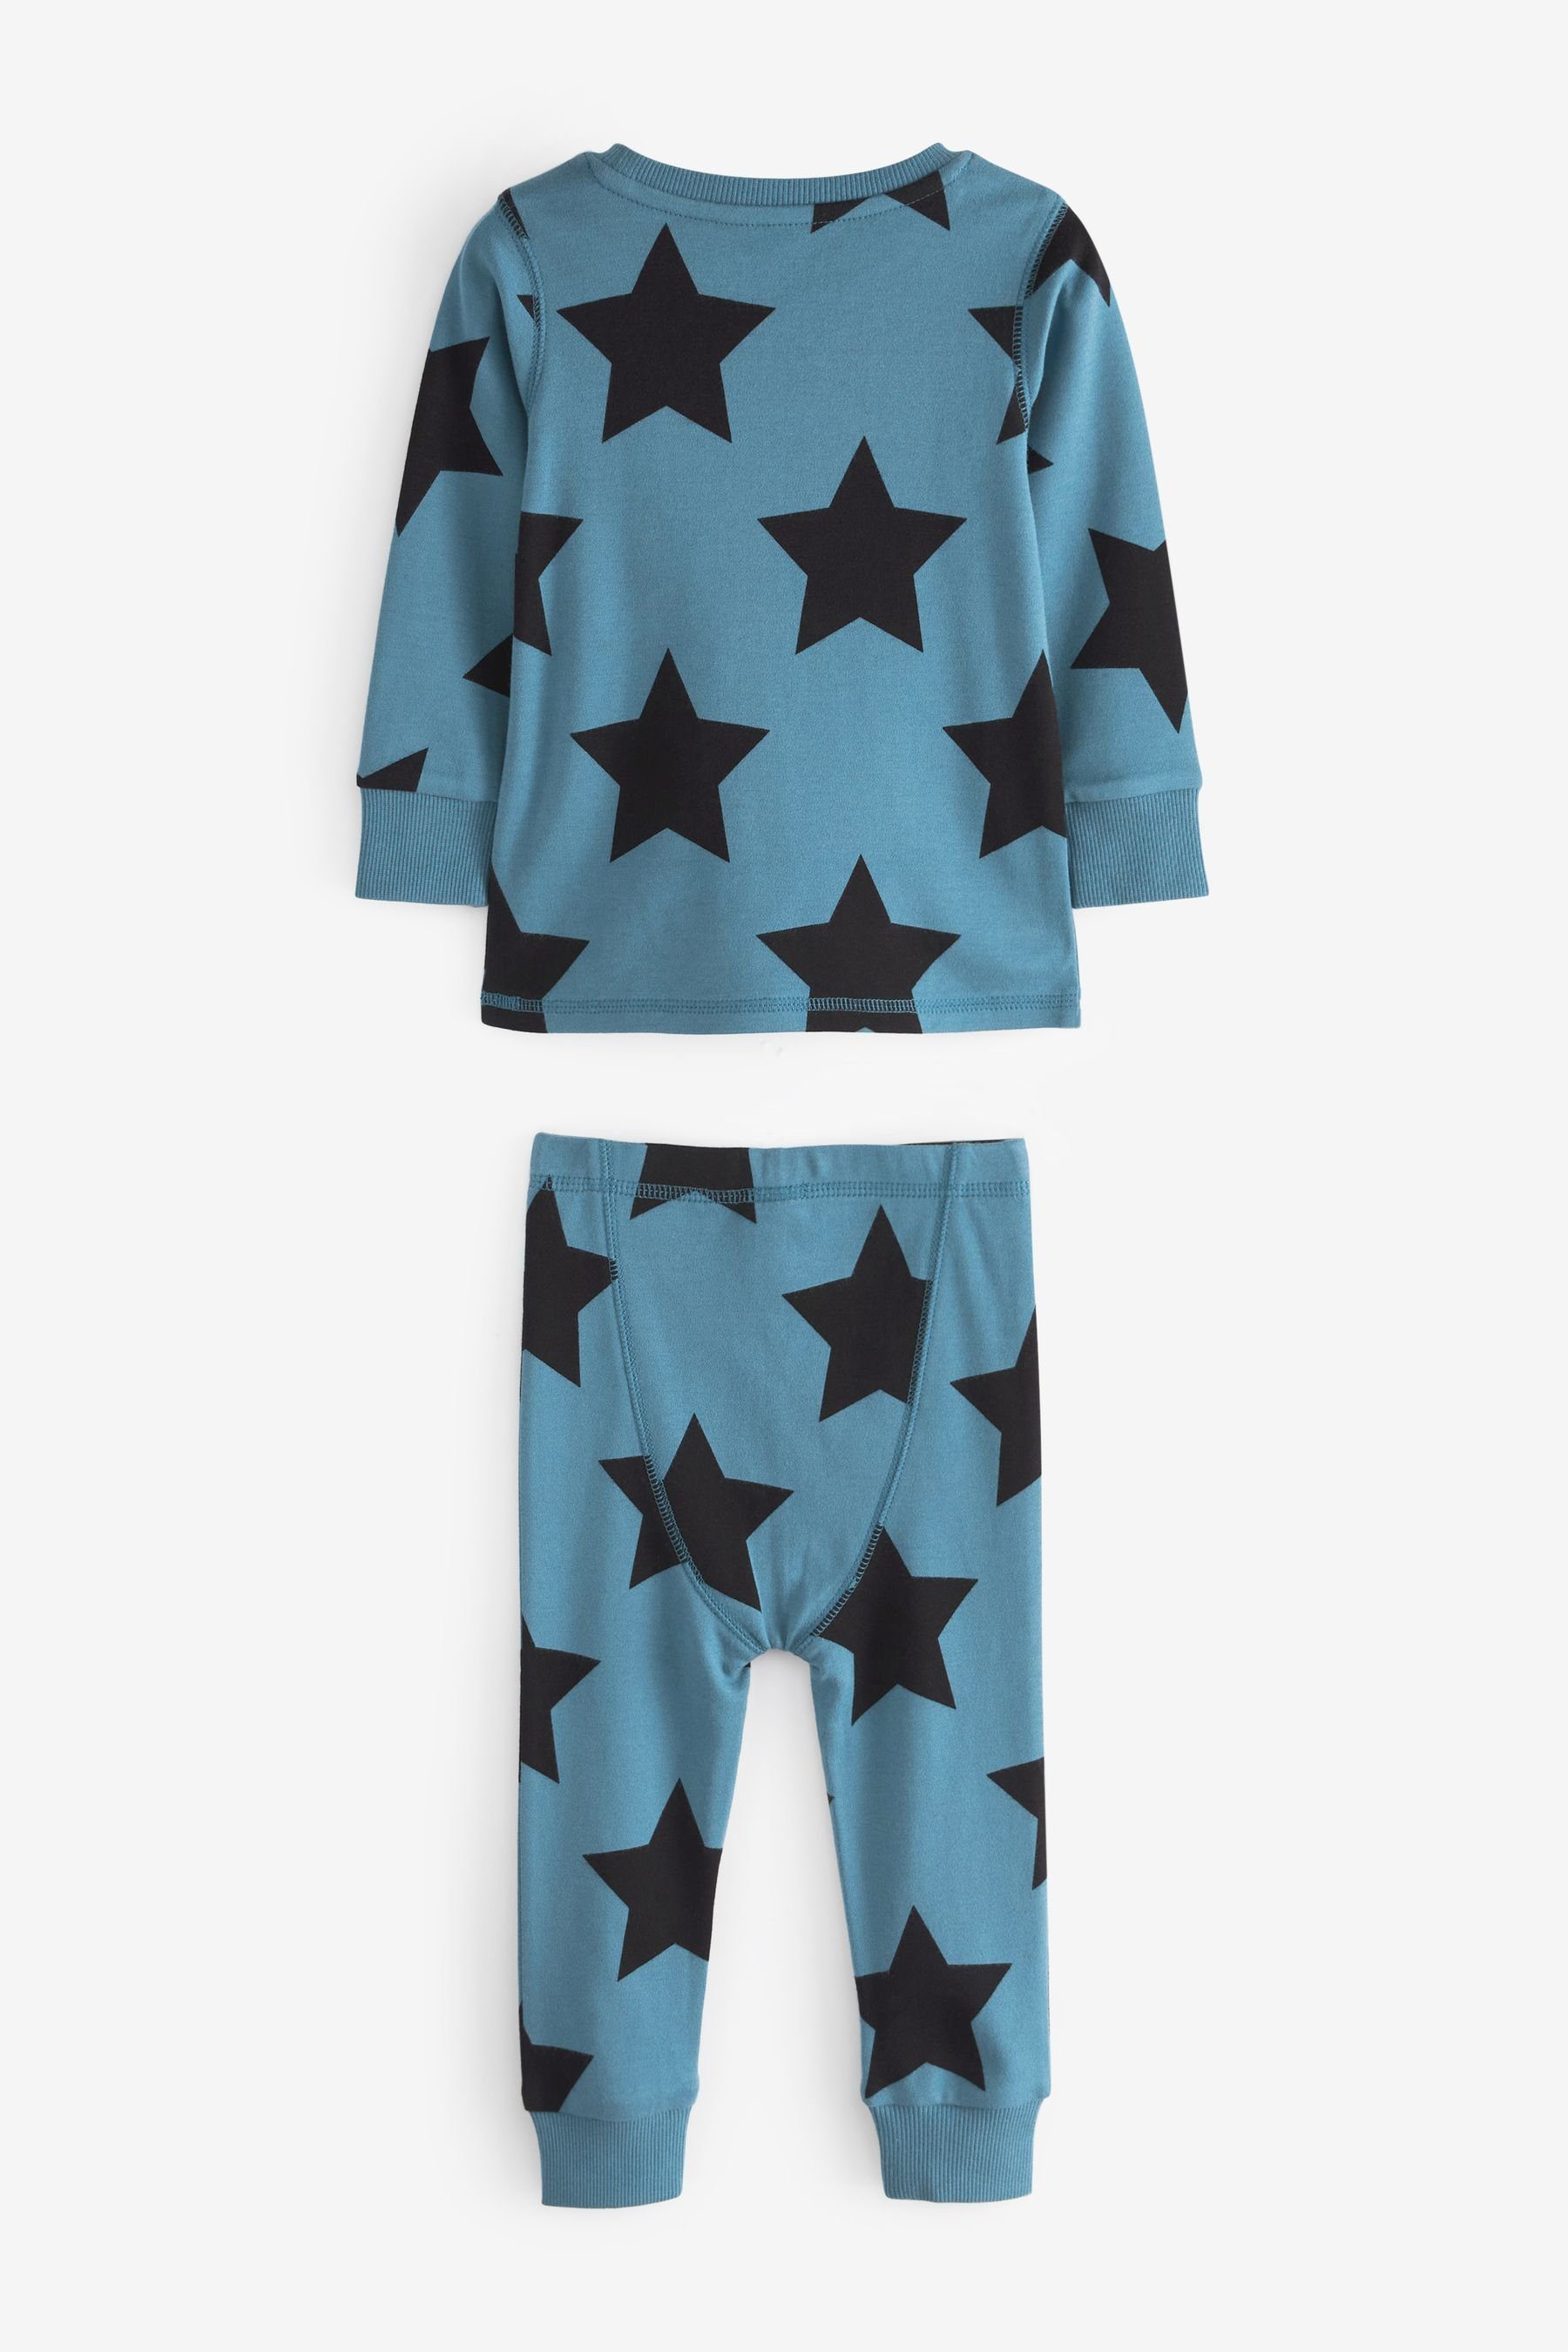 Next Pyjama Khaki Star Kuschelpyjamas, 3er-Pack Green/Blue/White tlg) (6